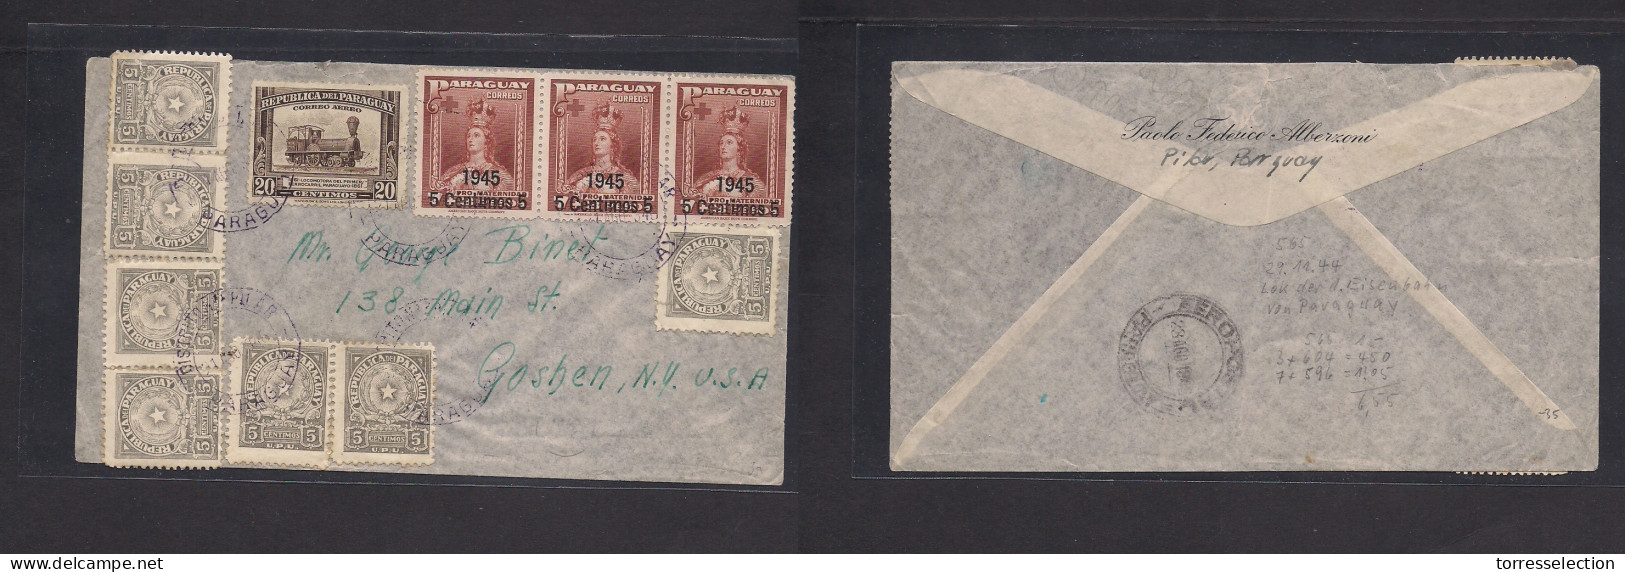 PERU. 1946 (21 Aug) Distrito Pilar - USA, Goshen, NY. Multifkd Mixed Issues Envelope Incl 1945 Ovptd. XSALE. - Peru